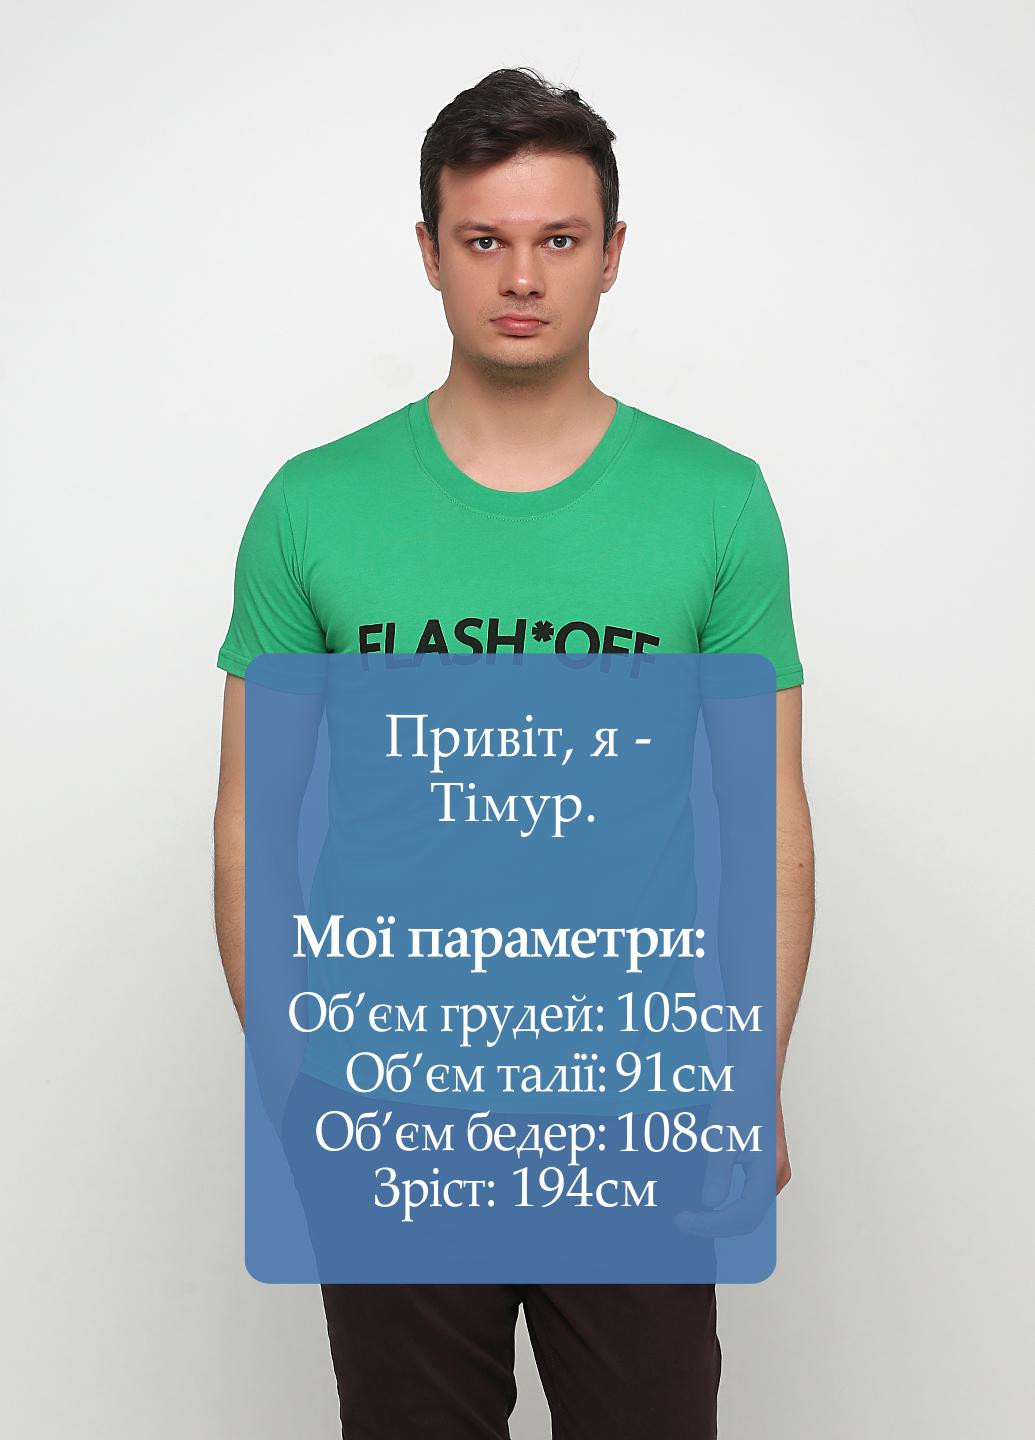 Зелена футболка Трикомир